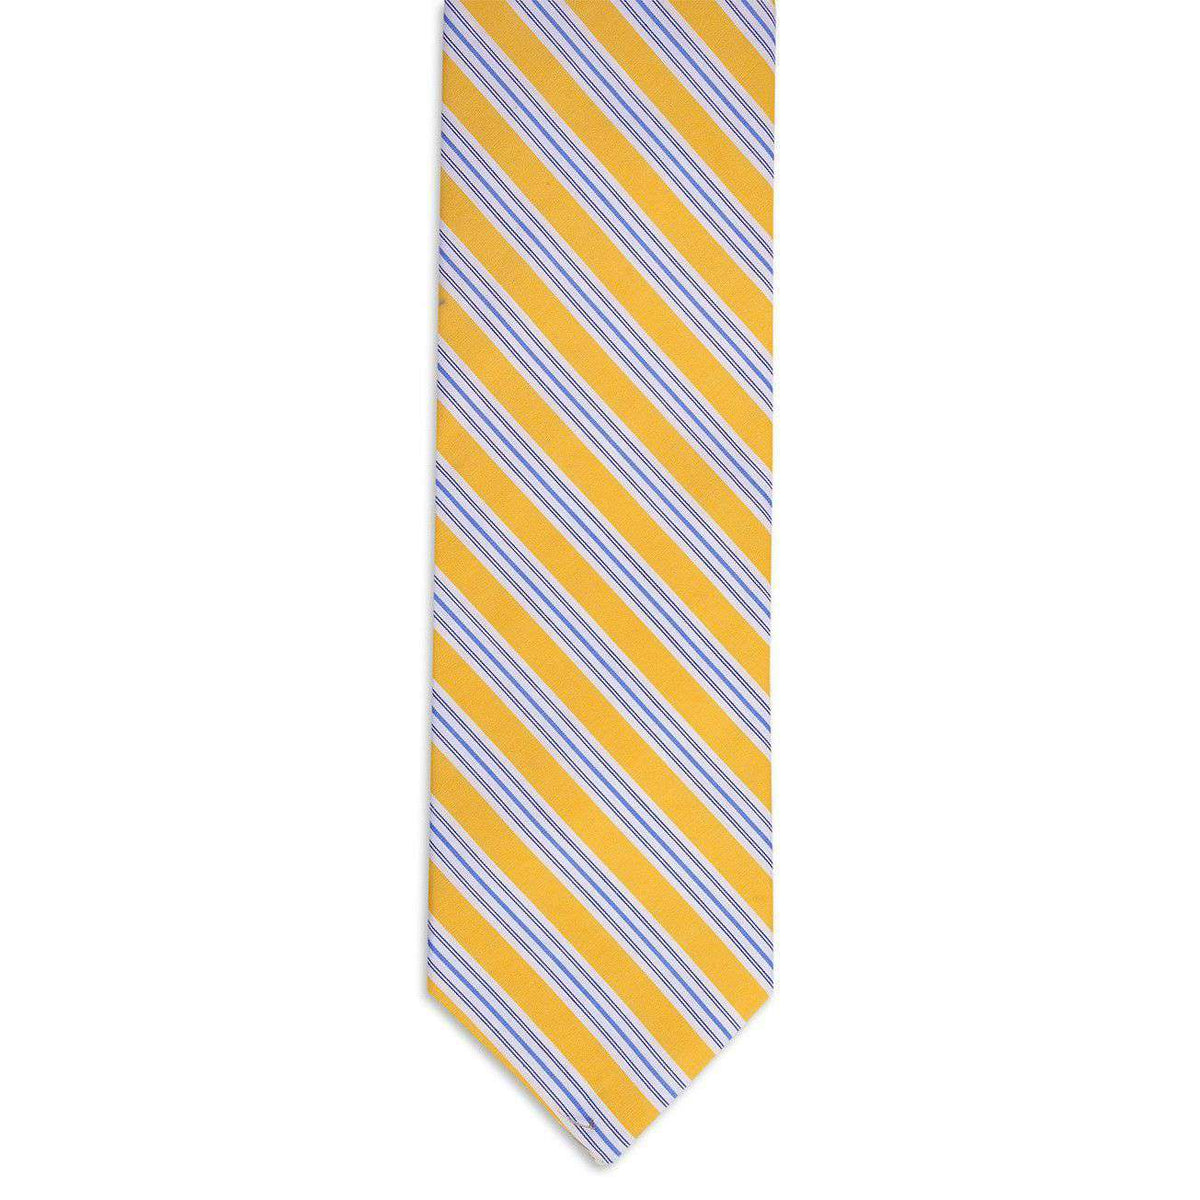 Spinnaker Stripe Necktie in Yellow by High Cotton - Country Club Prep